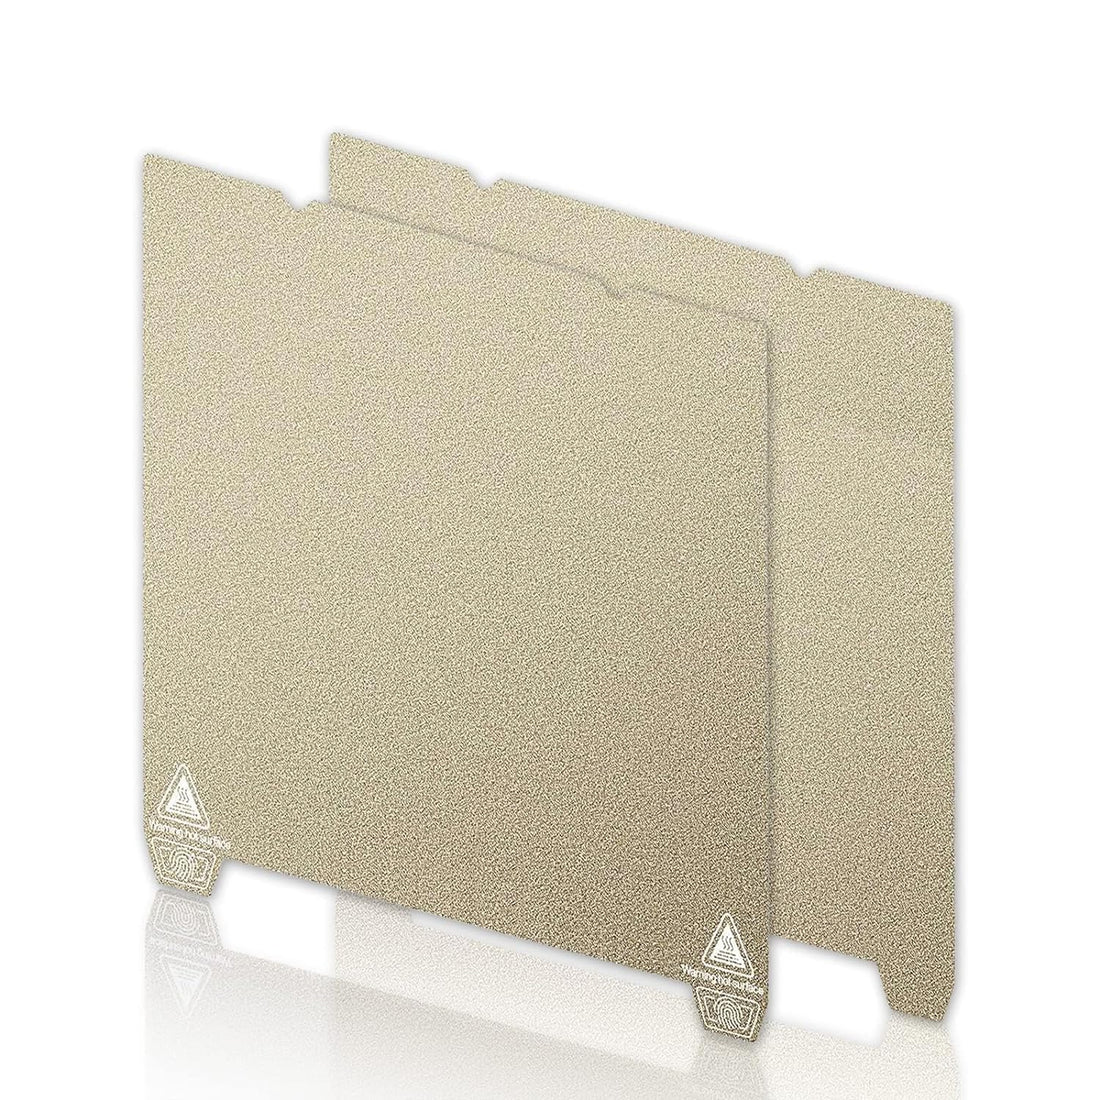 YOOPAI Double-Sided PEI Sheet and Flexible Magnetic Build Plate Kit, 235x235mm 3D Printer Bed Platform for Creality K1/Ender 5 S1/Ender 3/Ender 3 Pro/Ender 3 V2/Ender 3 S1 Pro/Ender 3 Neo, Gold